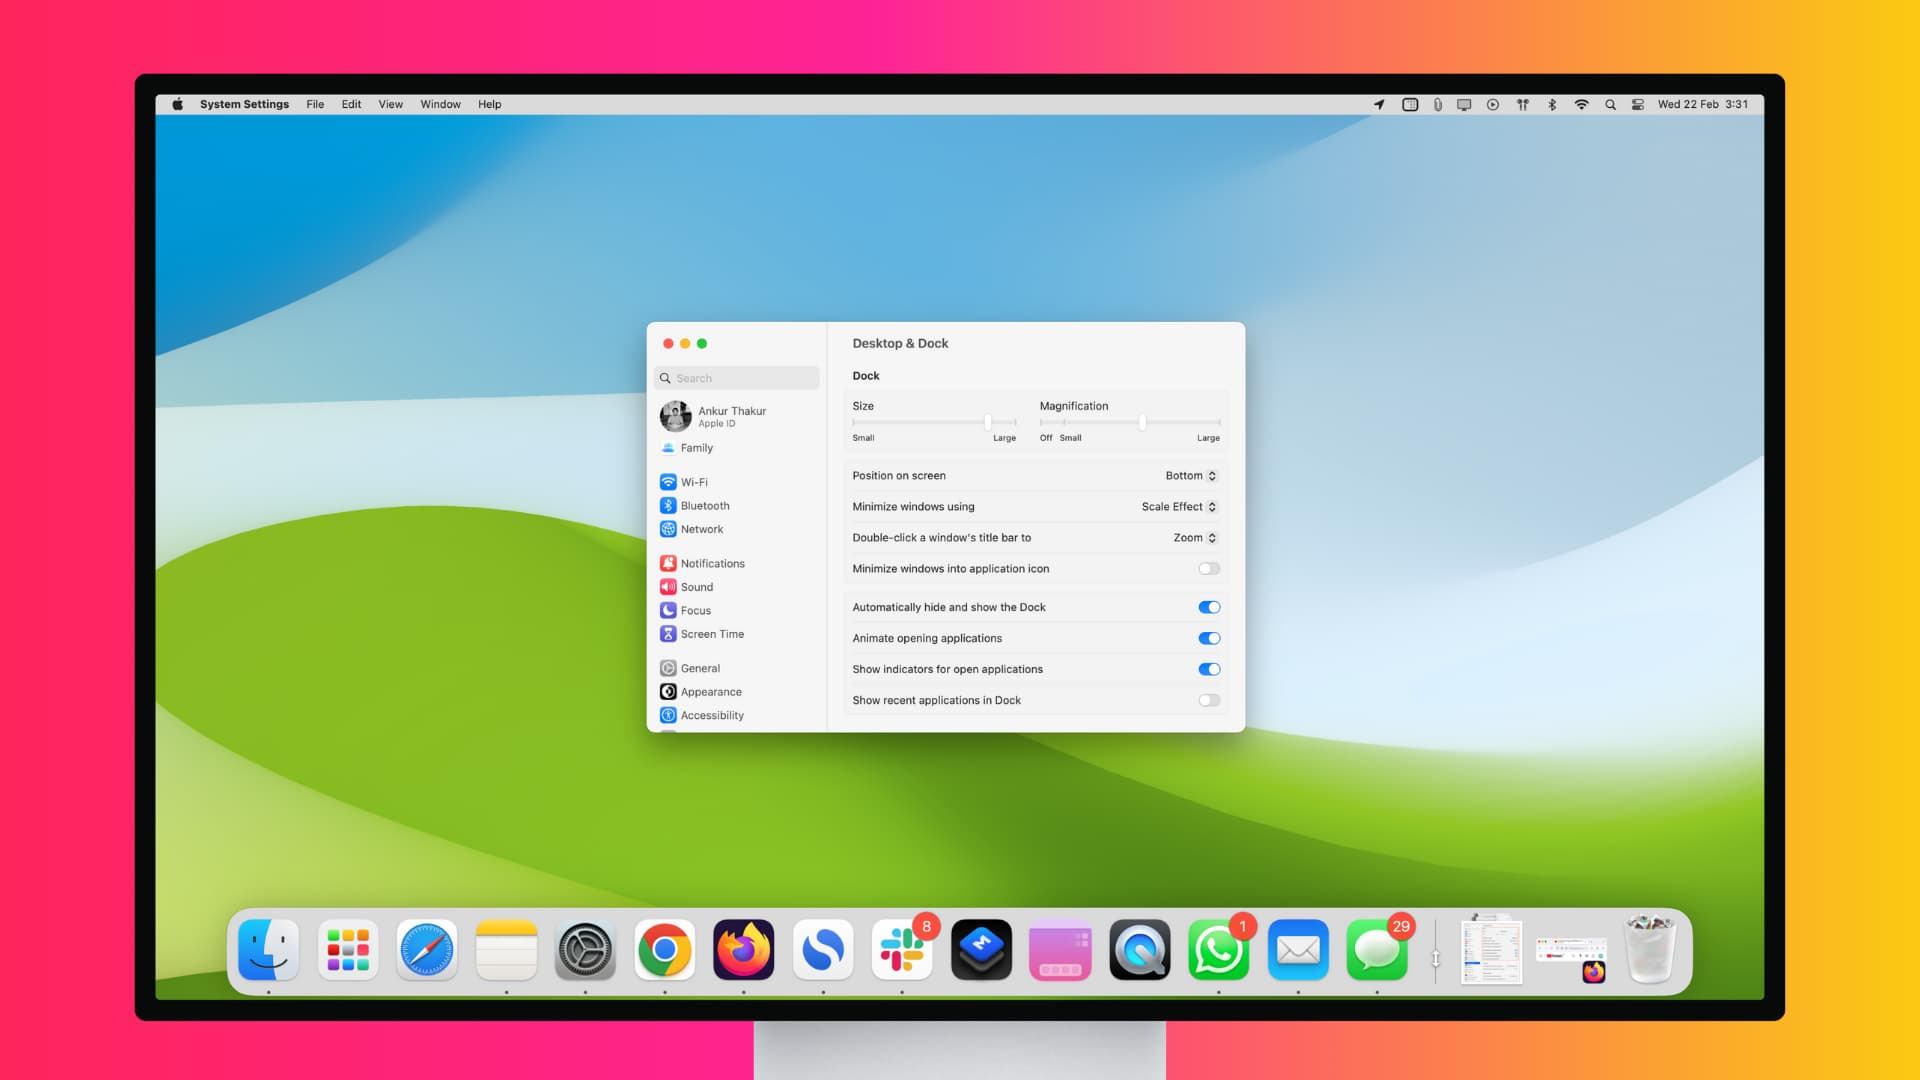 Mac Studio display showing its huge Dock and Dock settings on the screen